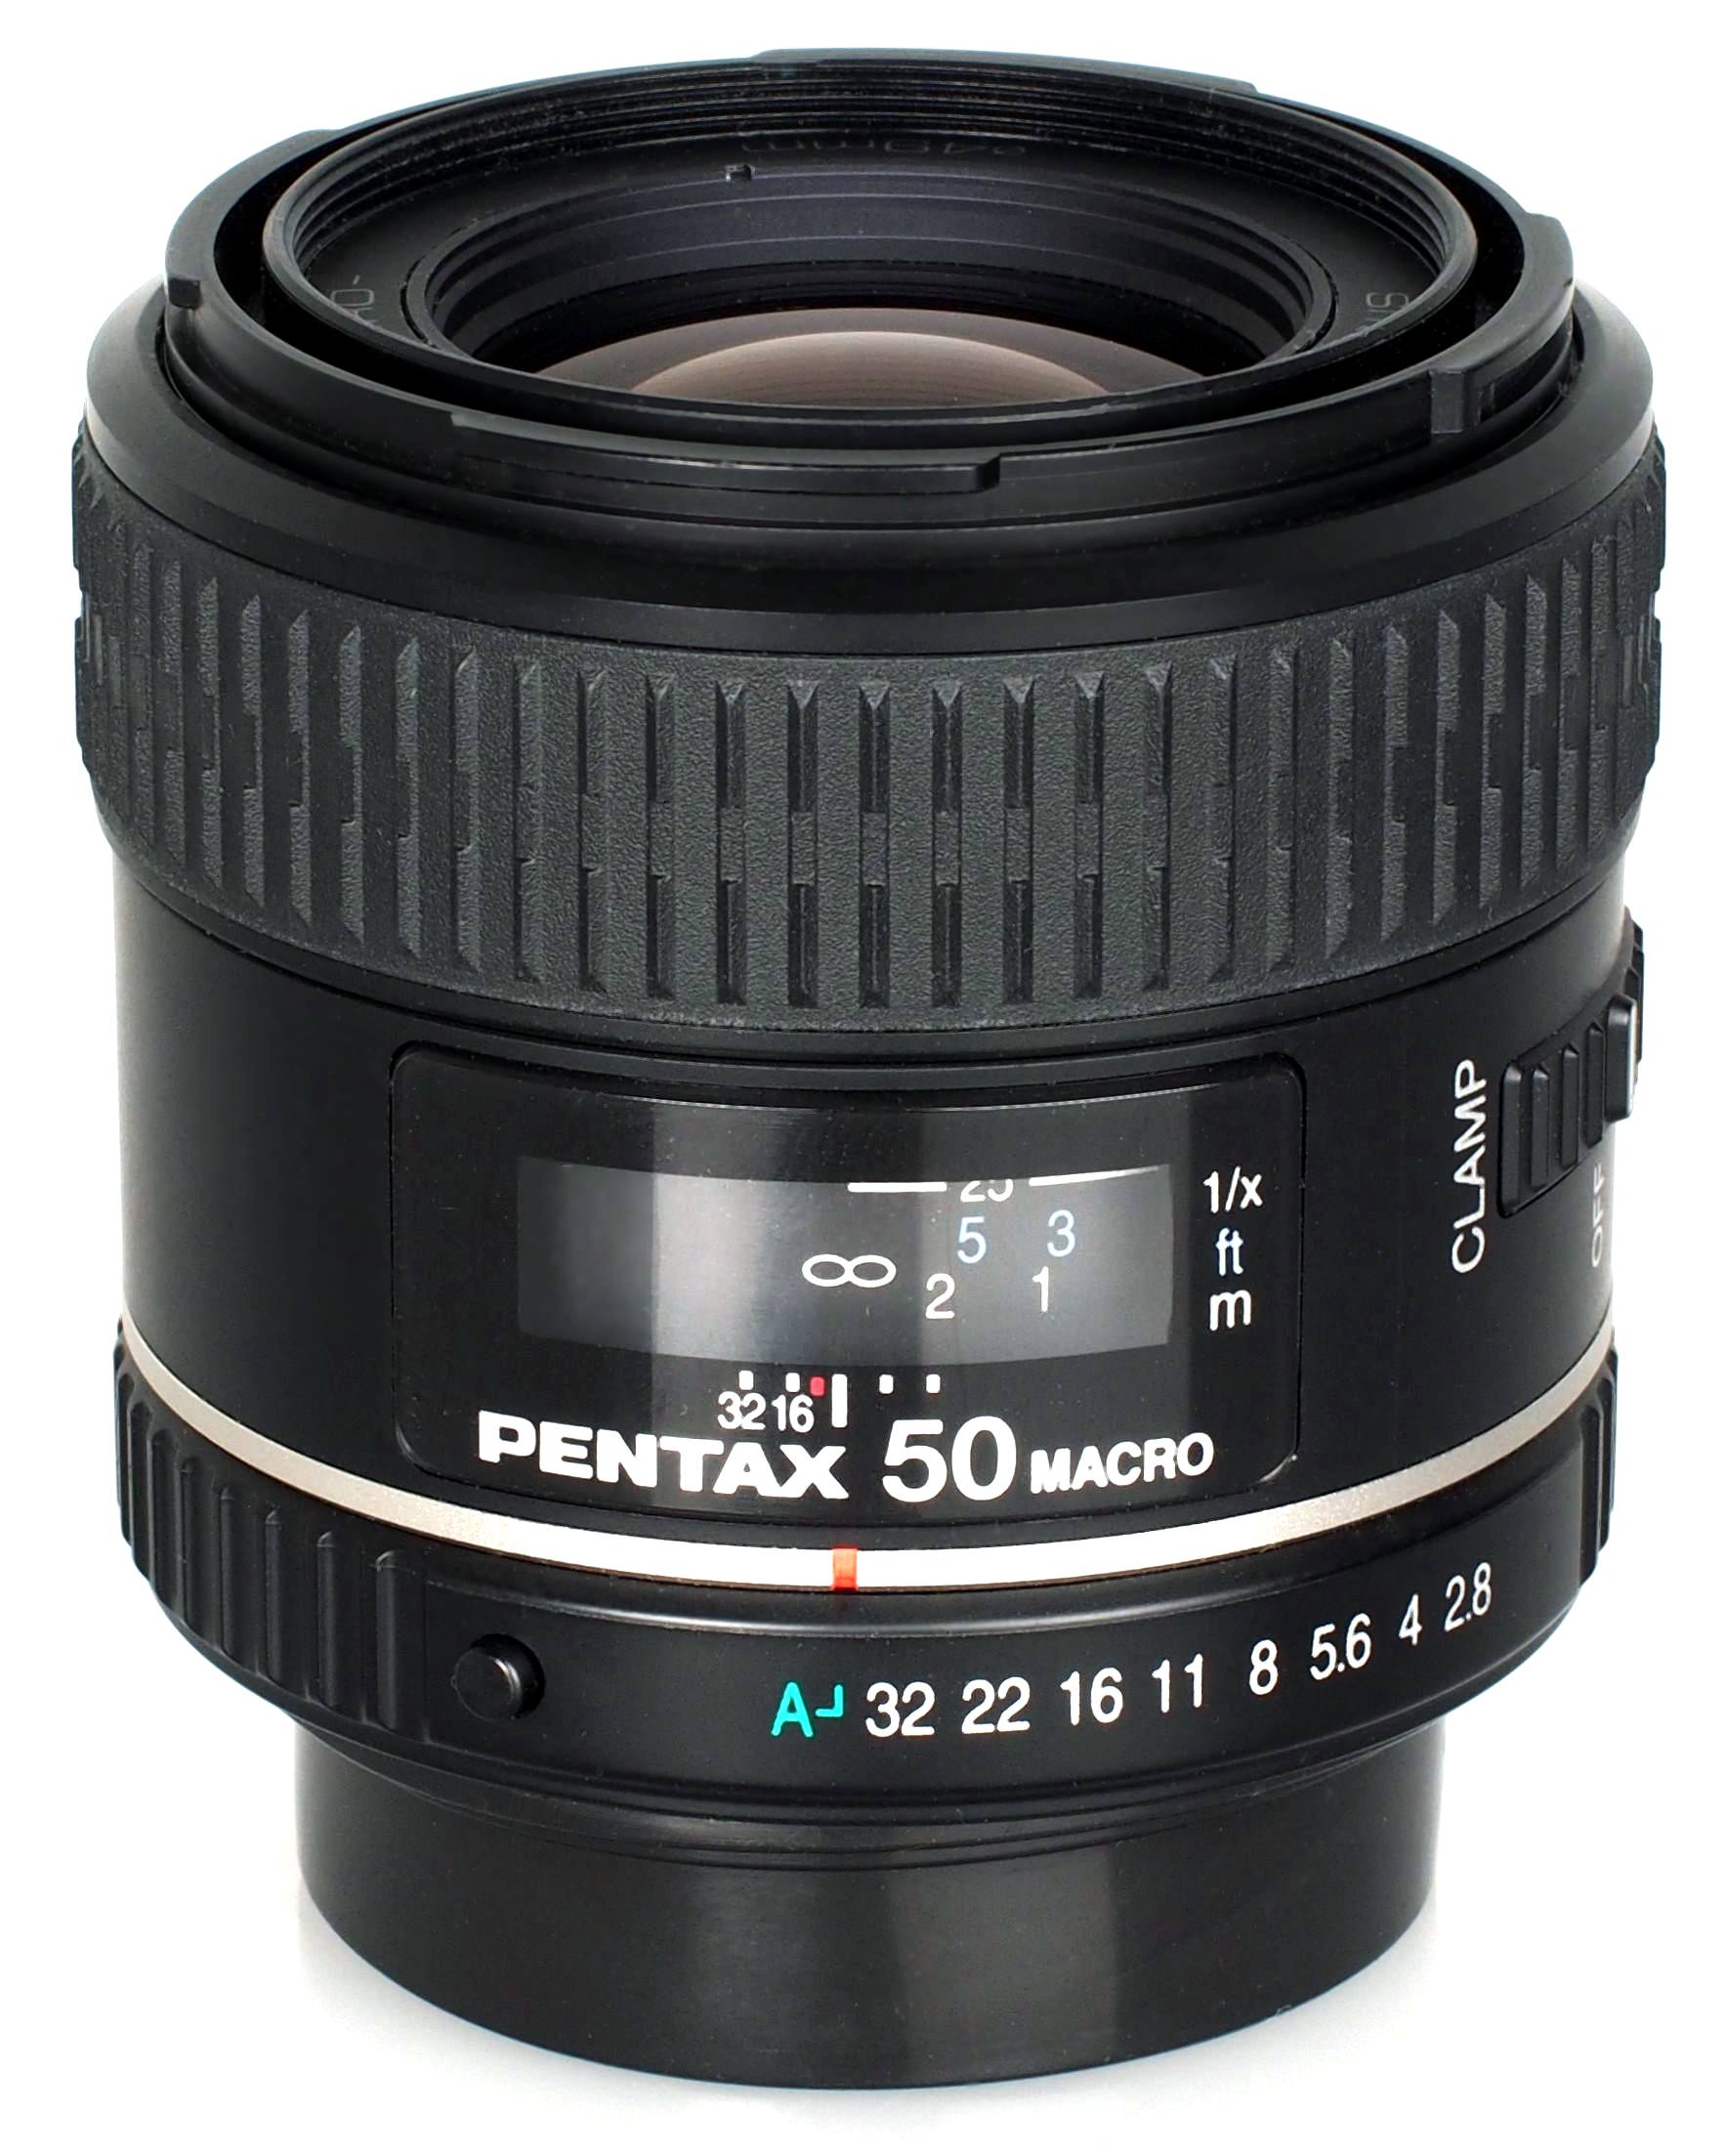 Product Image of Pentax 50mm F2.8 D FA SMC Macro Lens